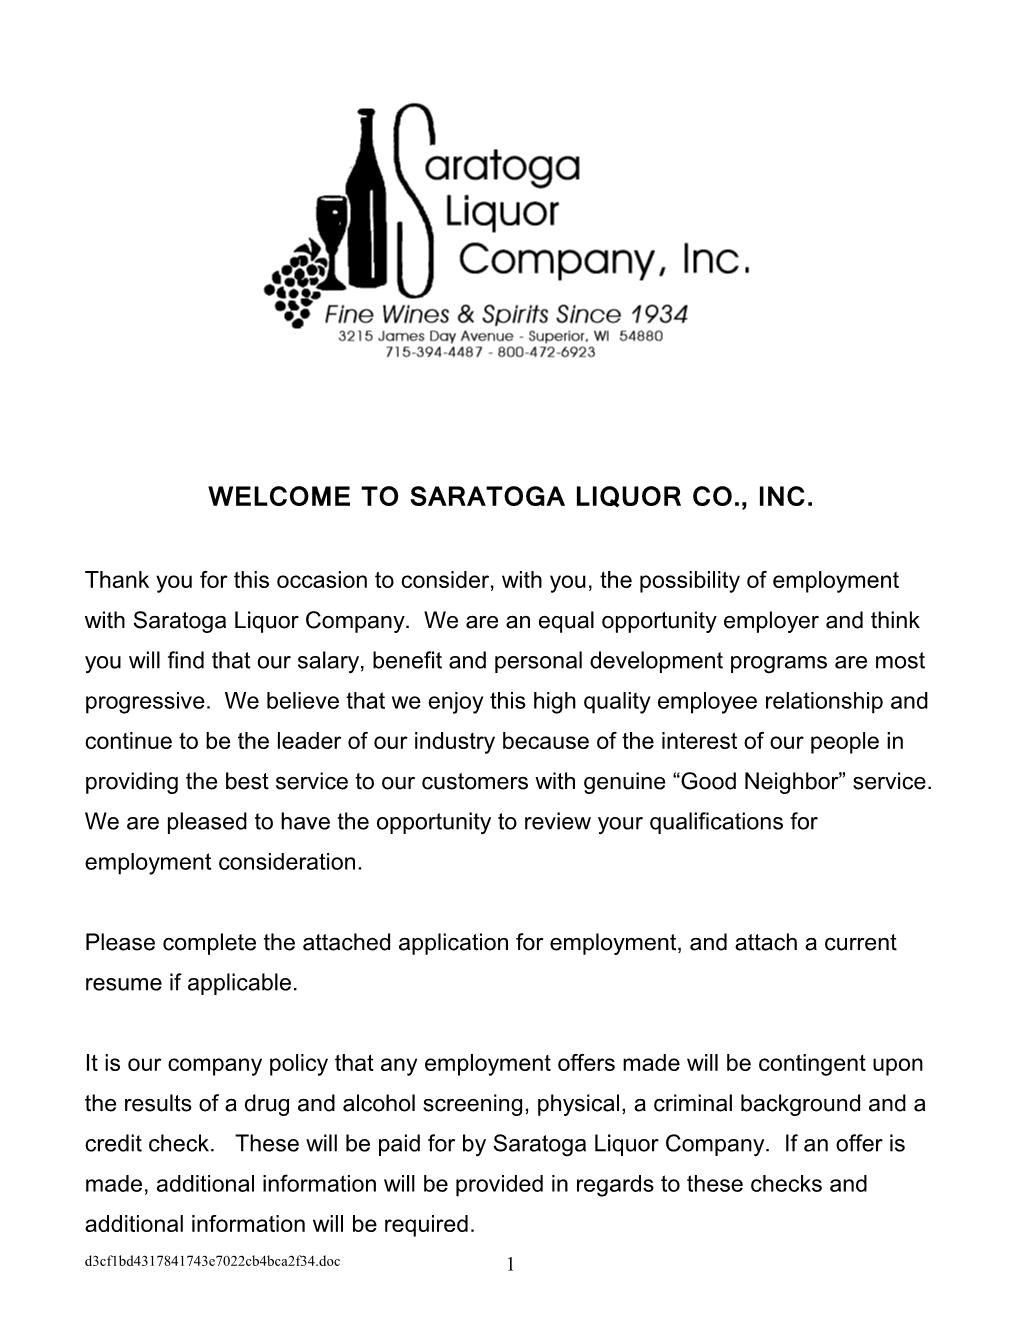 Welcome to Saratoga Liquor Co., Inc